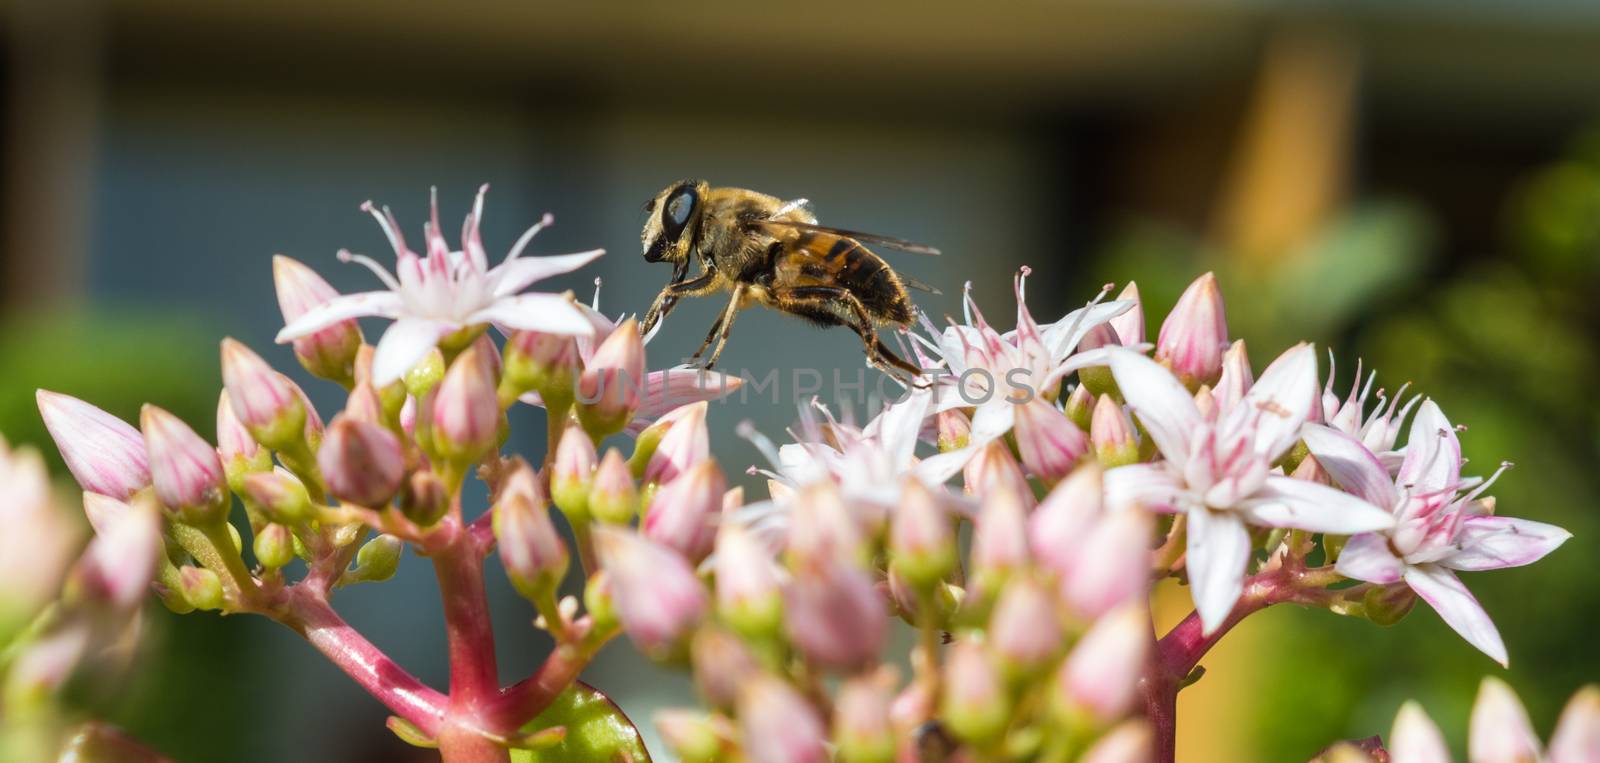 Honeybee Balancing on Jade Plant by margaret_clavell